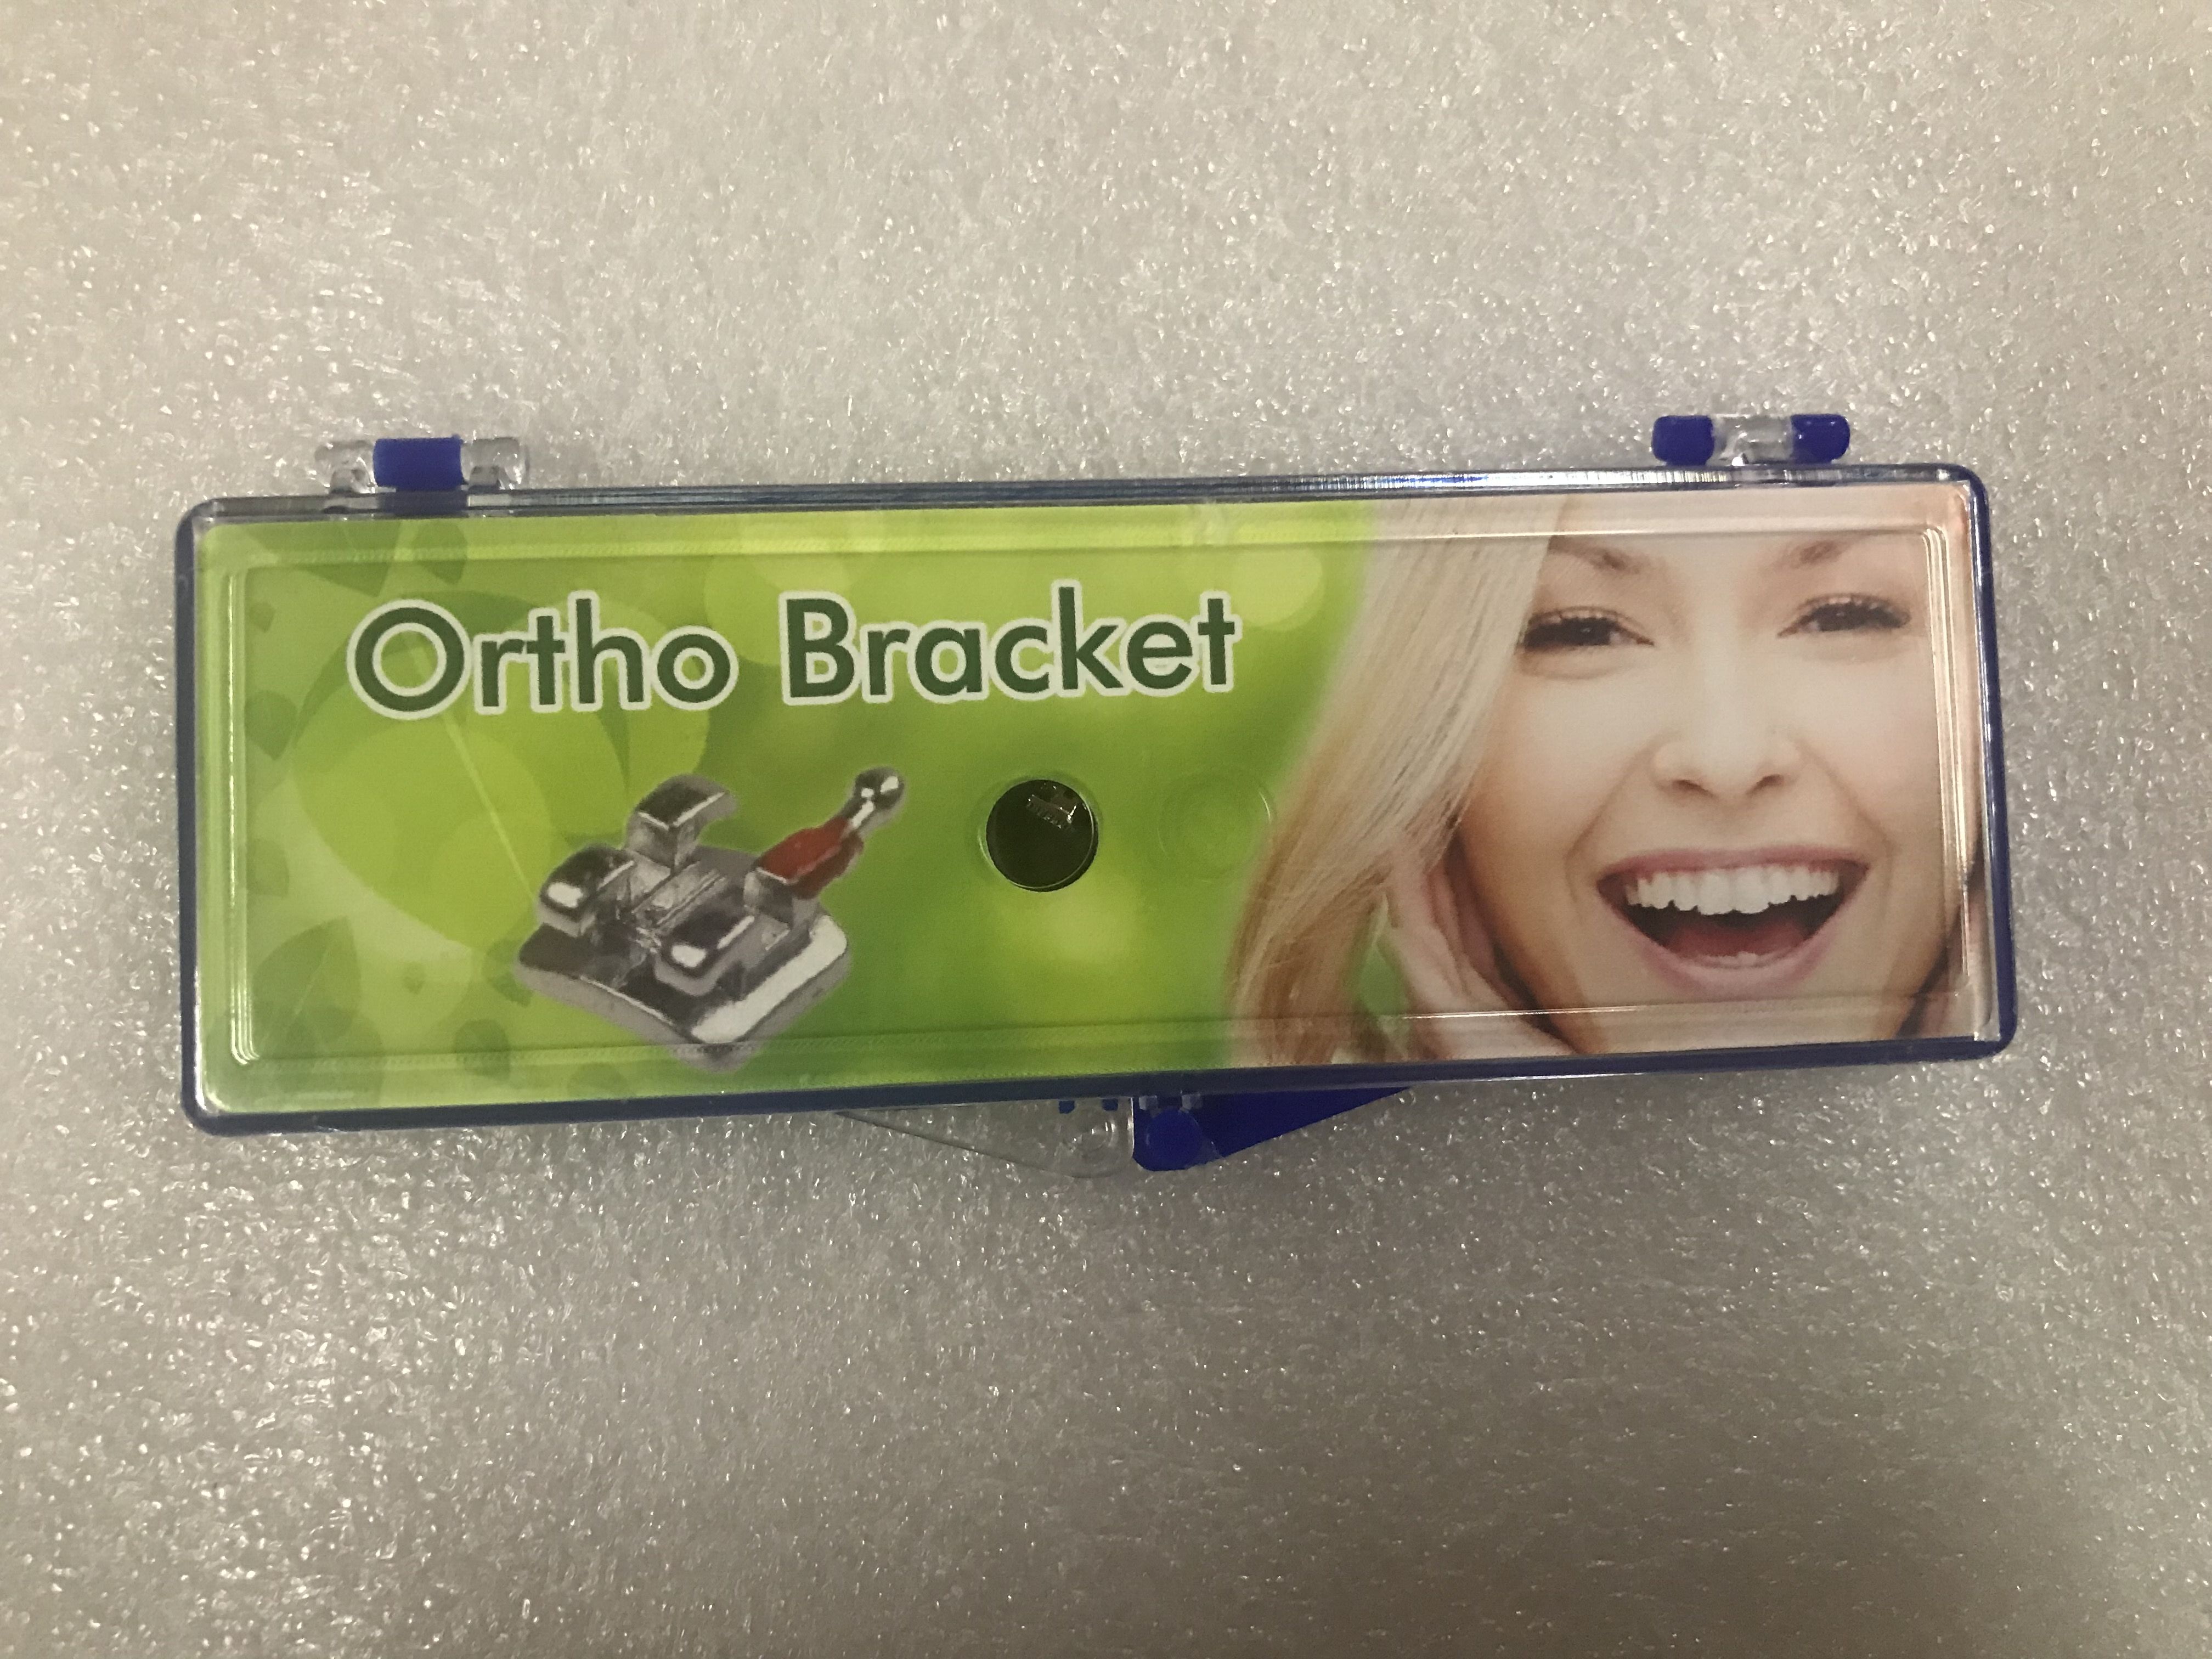 Orthodontic Dental Braces Ceramic Brackets popular in South America